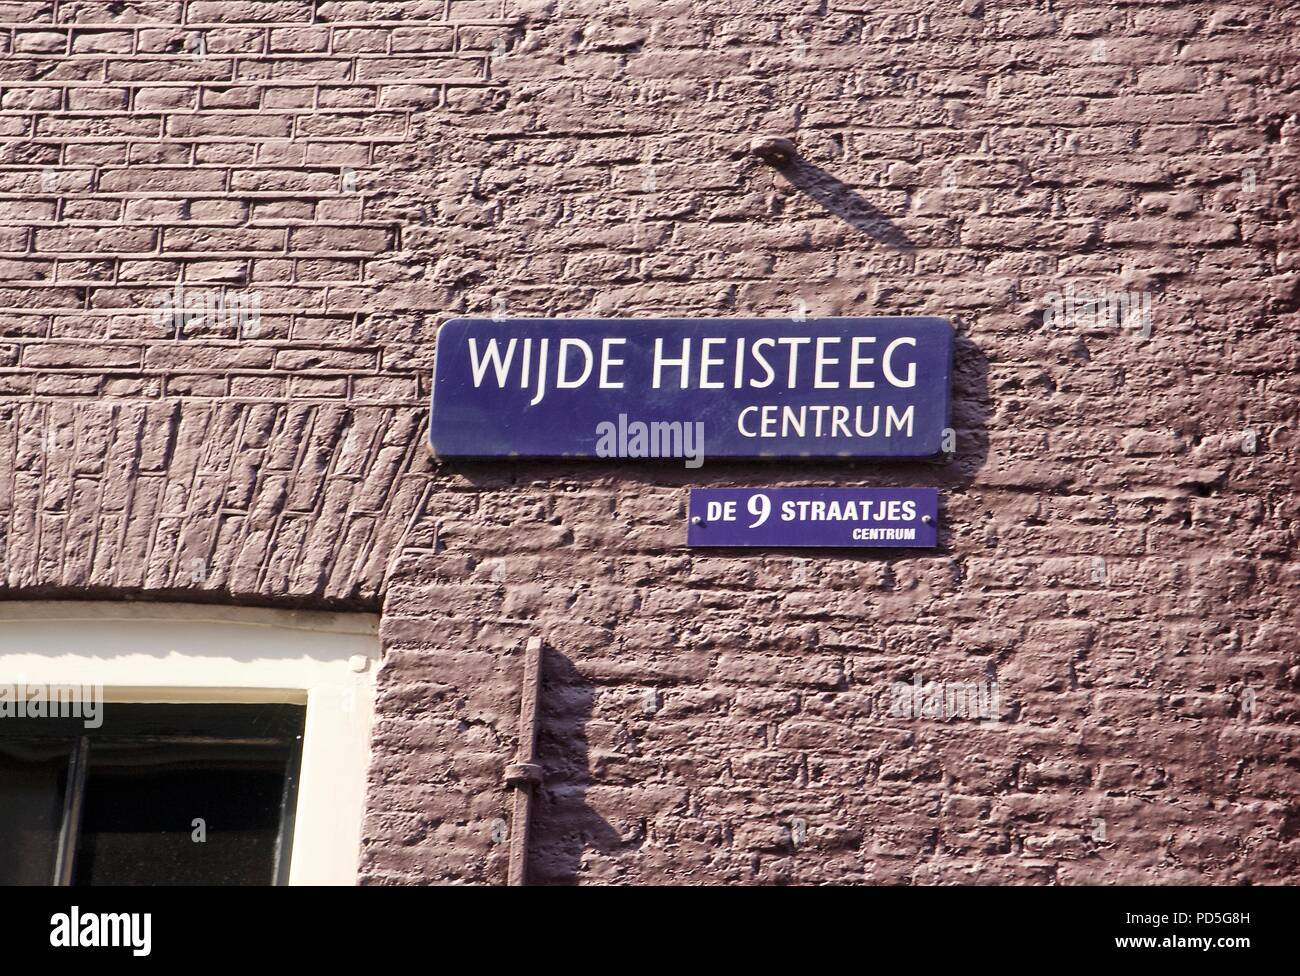 Wijde Heisteeg, einer Straße in Negen Straatjes oder De 9 Straatjes, in der Gemeinde Centrum in Amsterdam Stockfoto